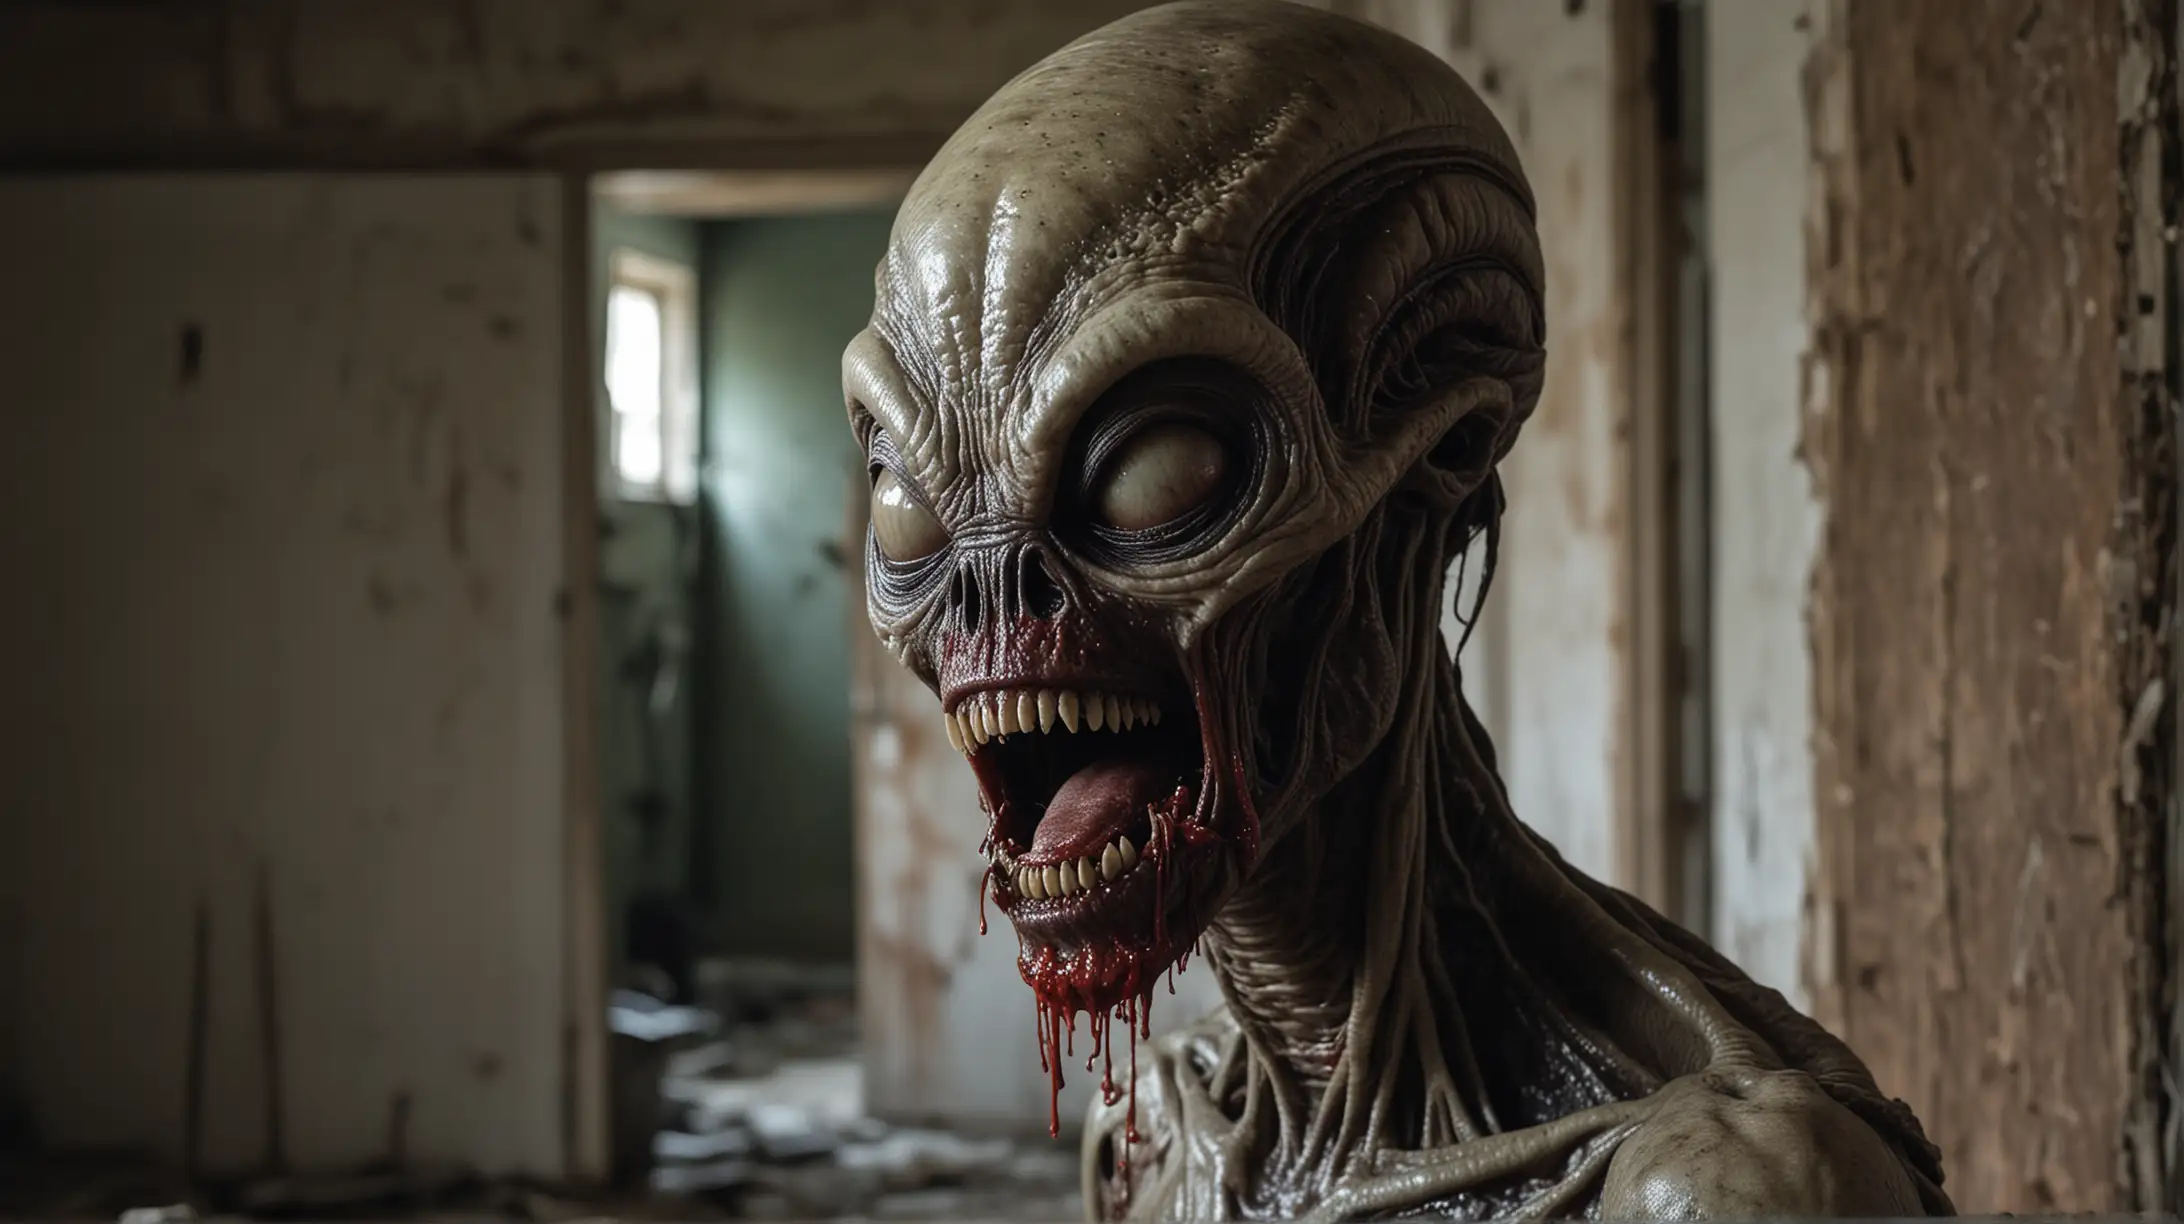 Frightening Alien Intruder in a Deserted Haunted Mansion